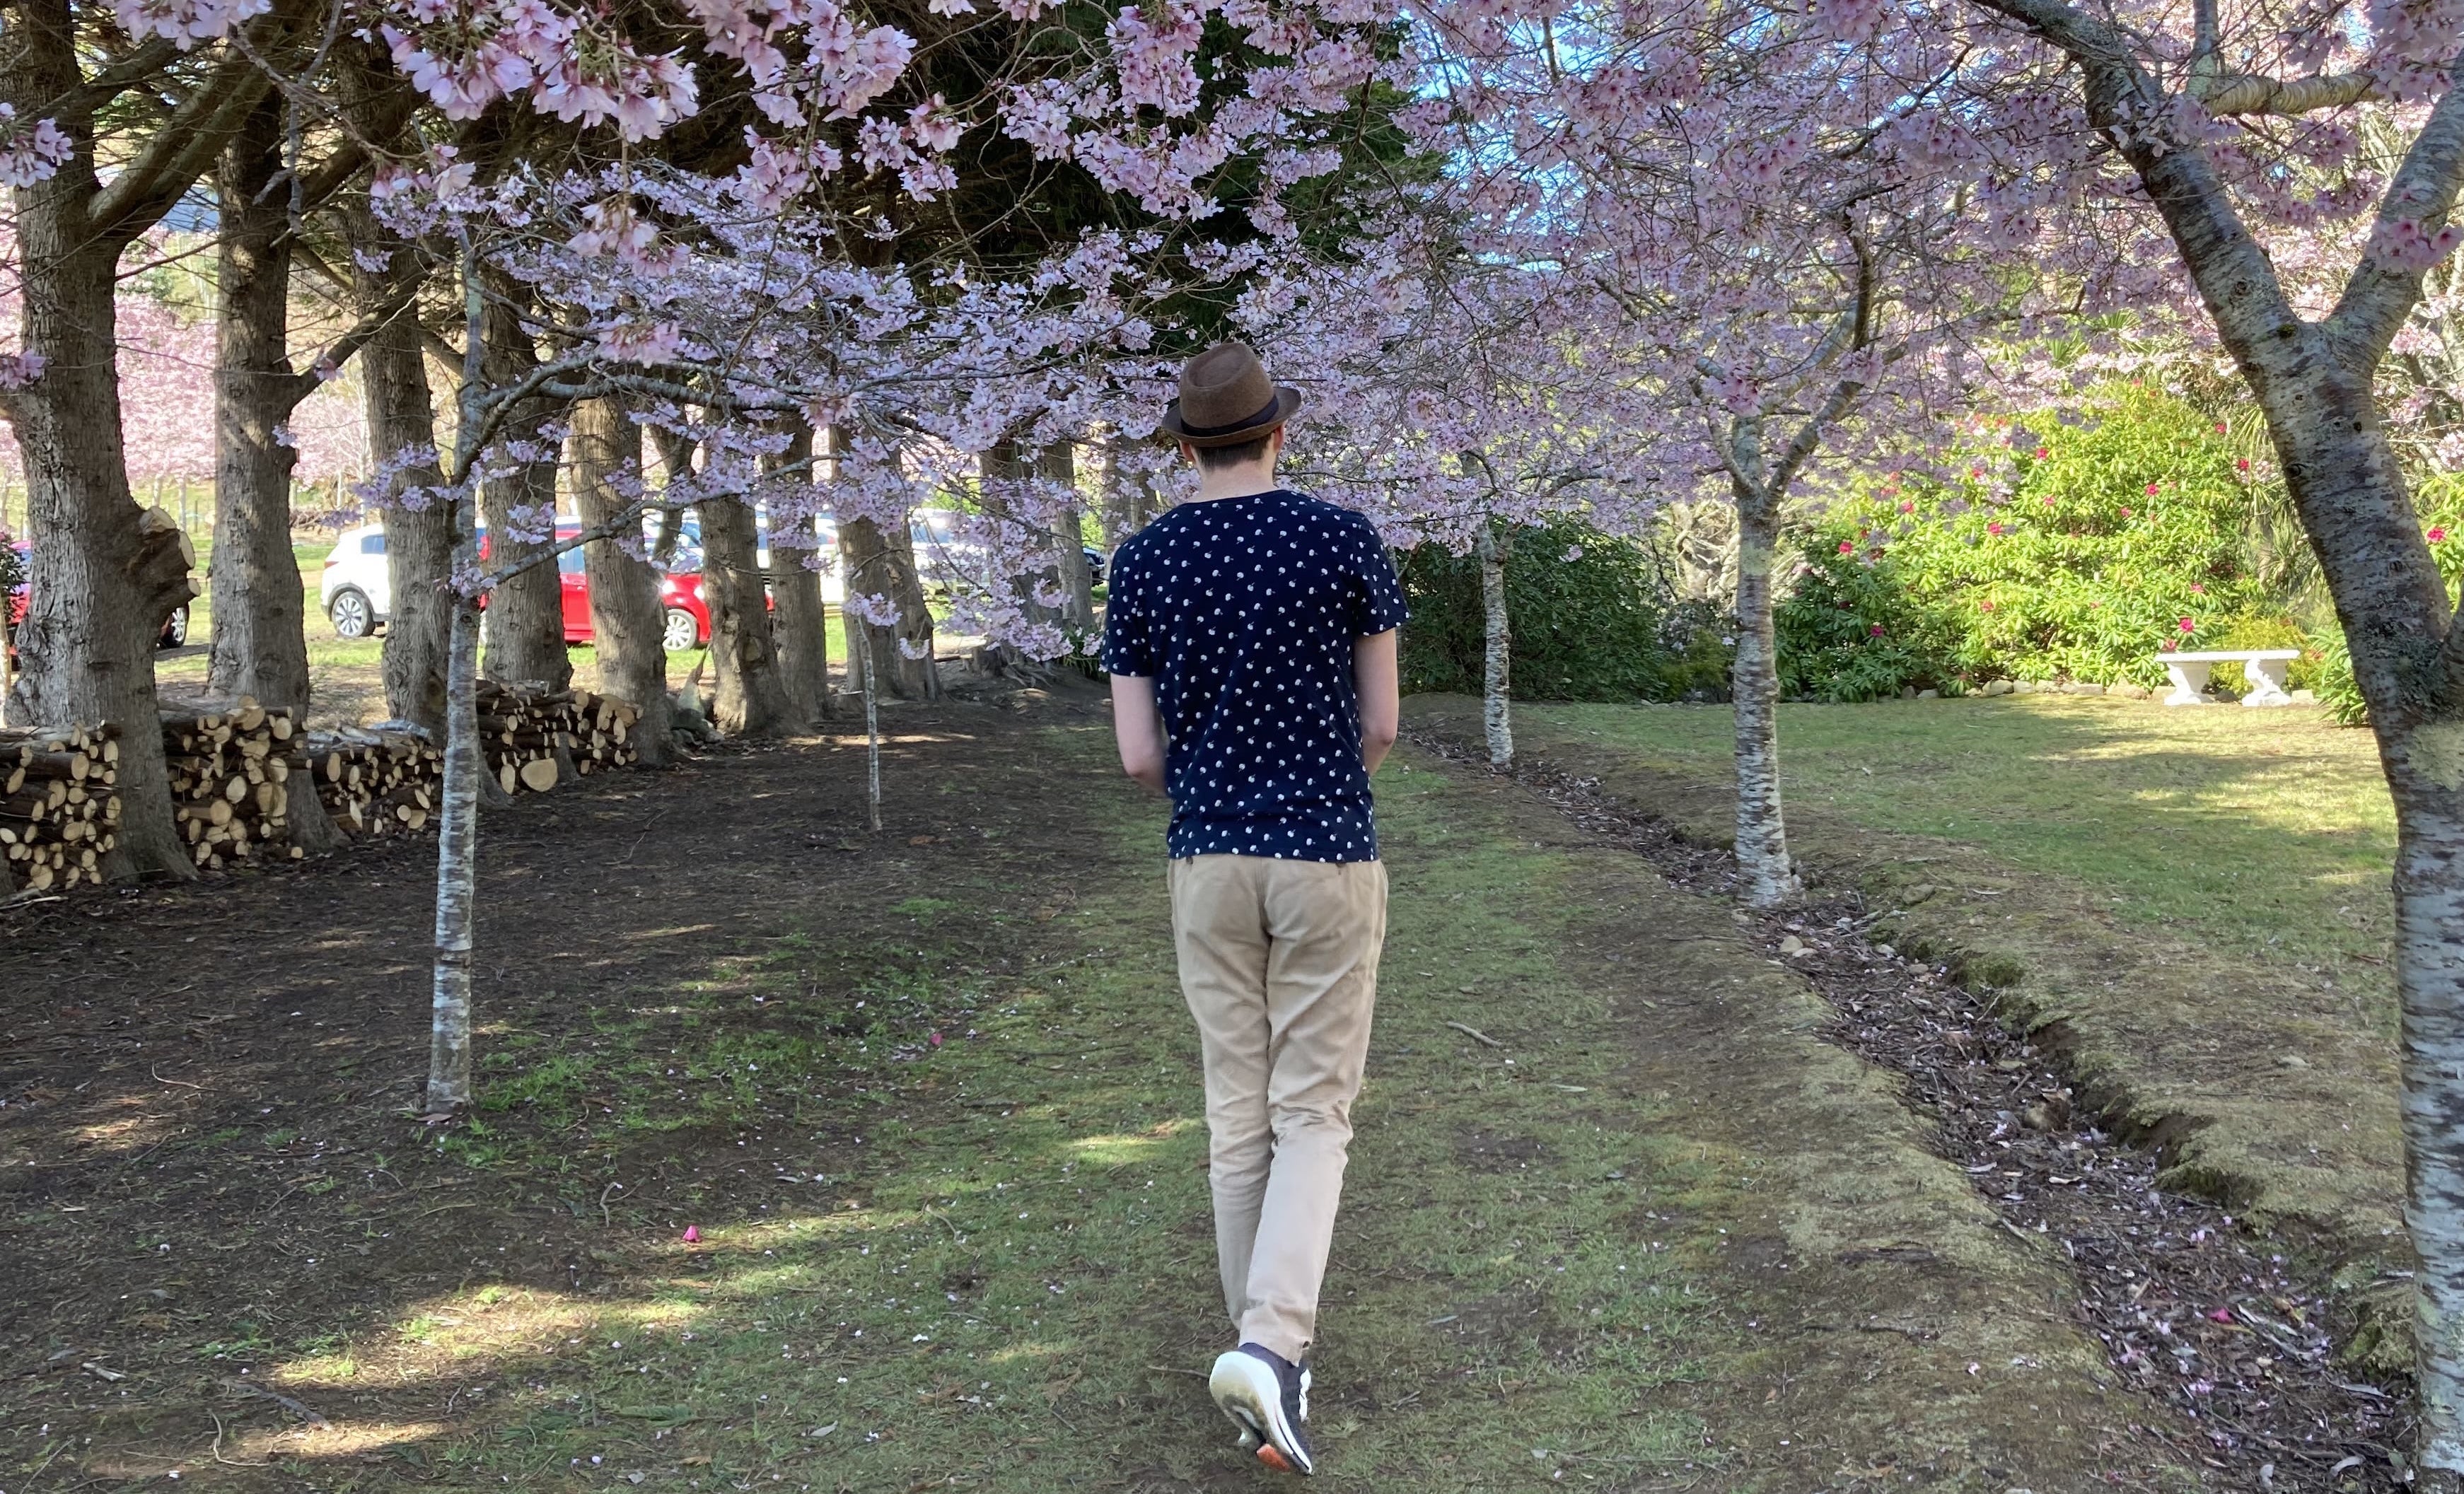 Garion walking through a field of sakura trees in Wellington, New Zealand